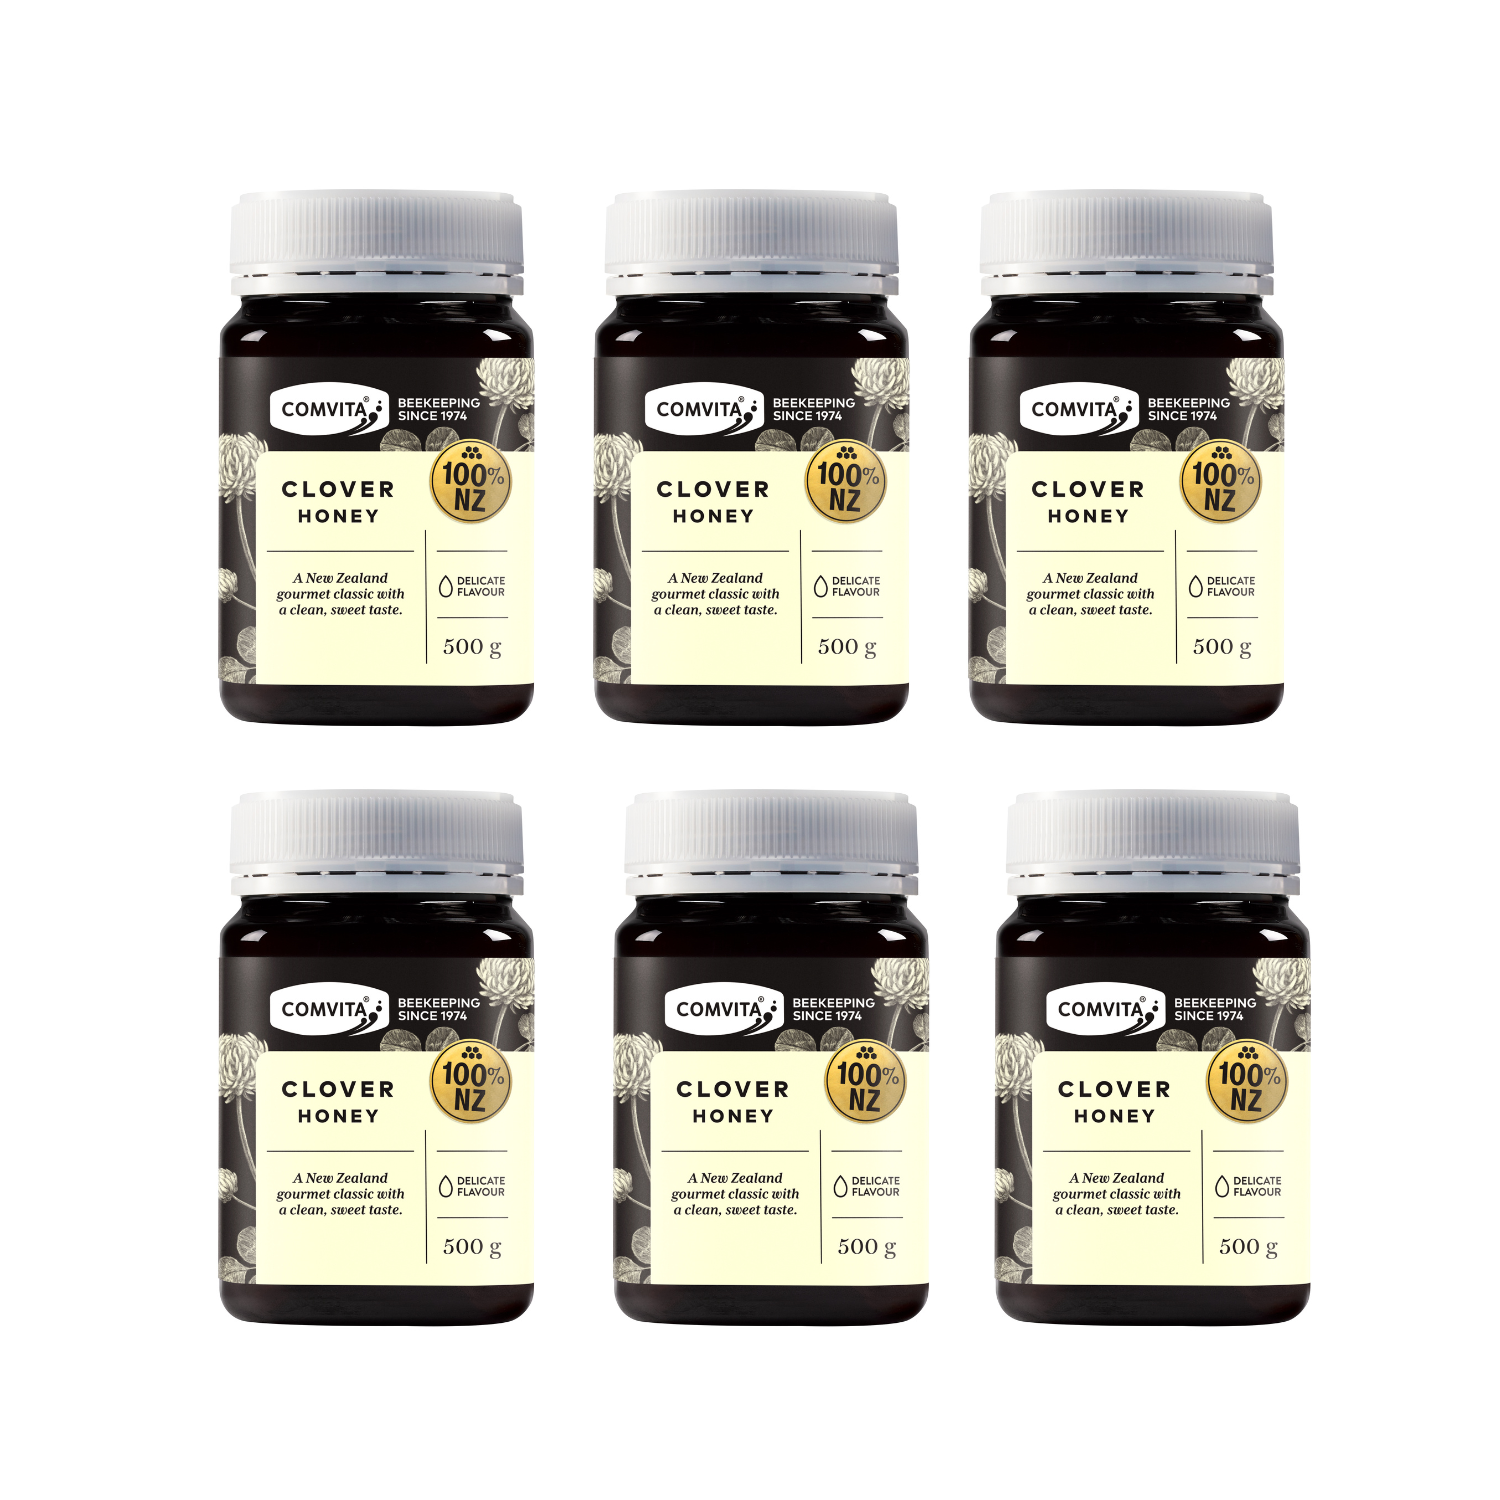 30% Off [Bundle of 6] Comvita Clover Honey, 500g